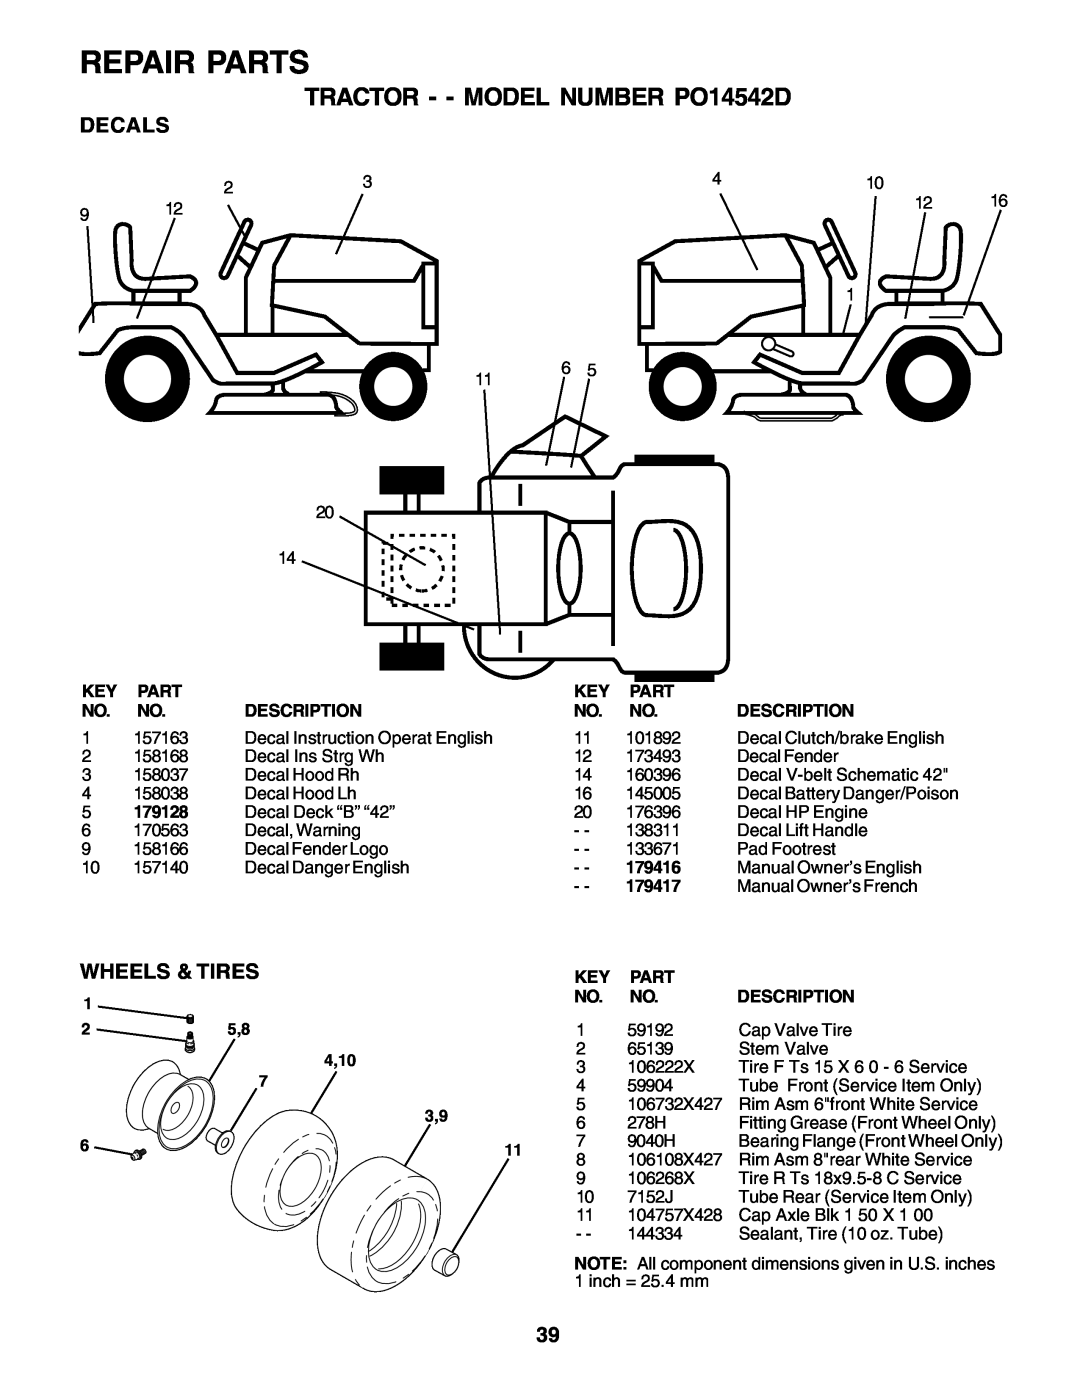 Poulan 179416 manual Repair Parts, TRACTOR - - MODEL NUMBER PO14542D, Decals, Wheels & Tires, Description, 179128, 179417 